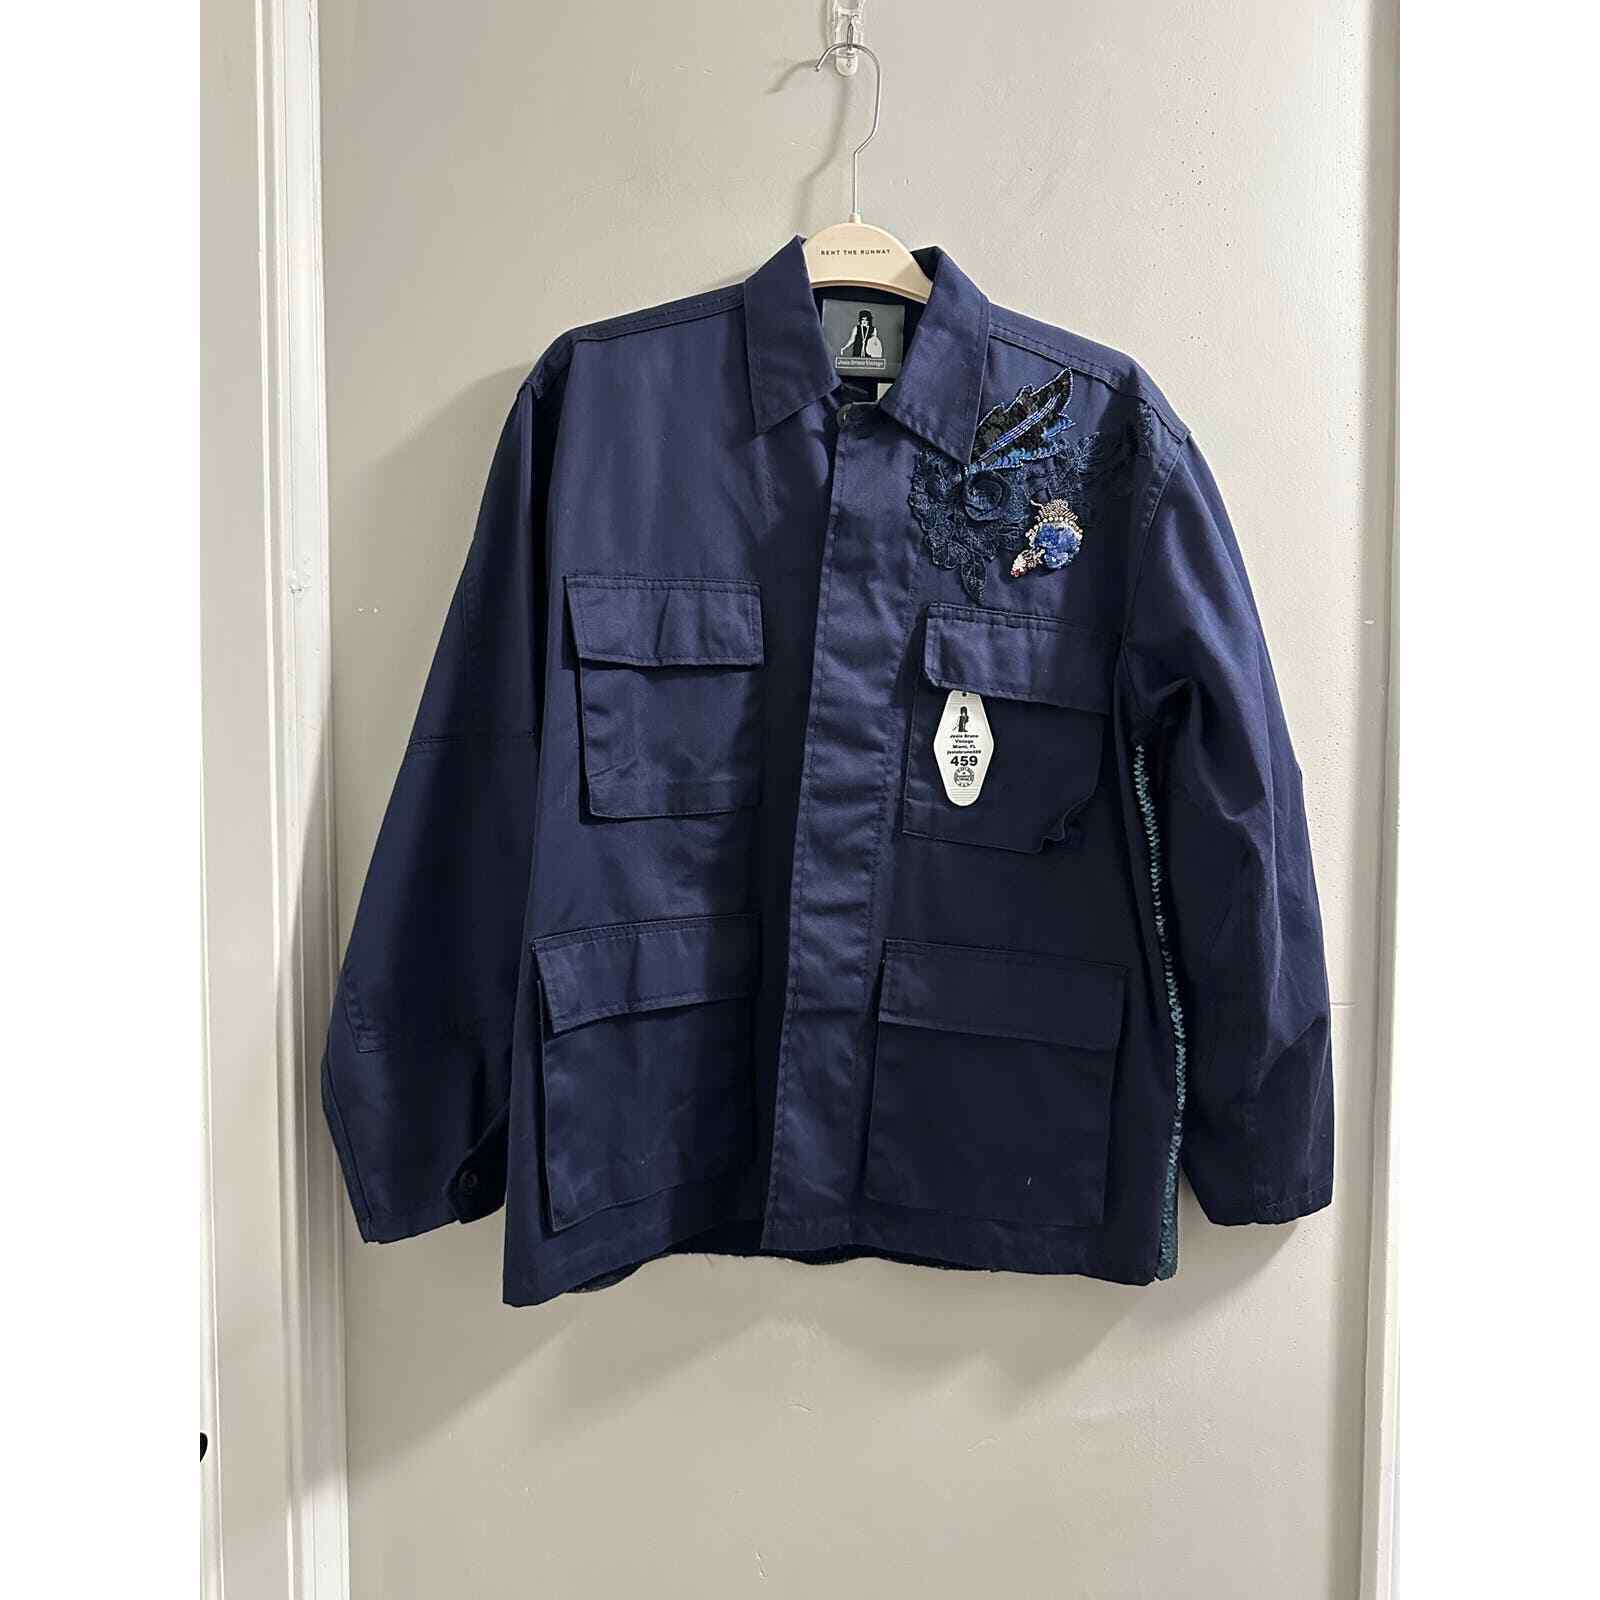 josie bruno vintage bespoke blue jacket